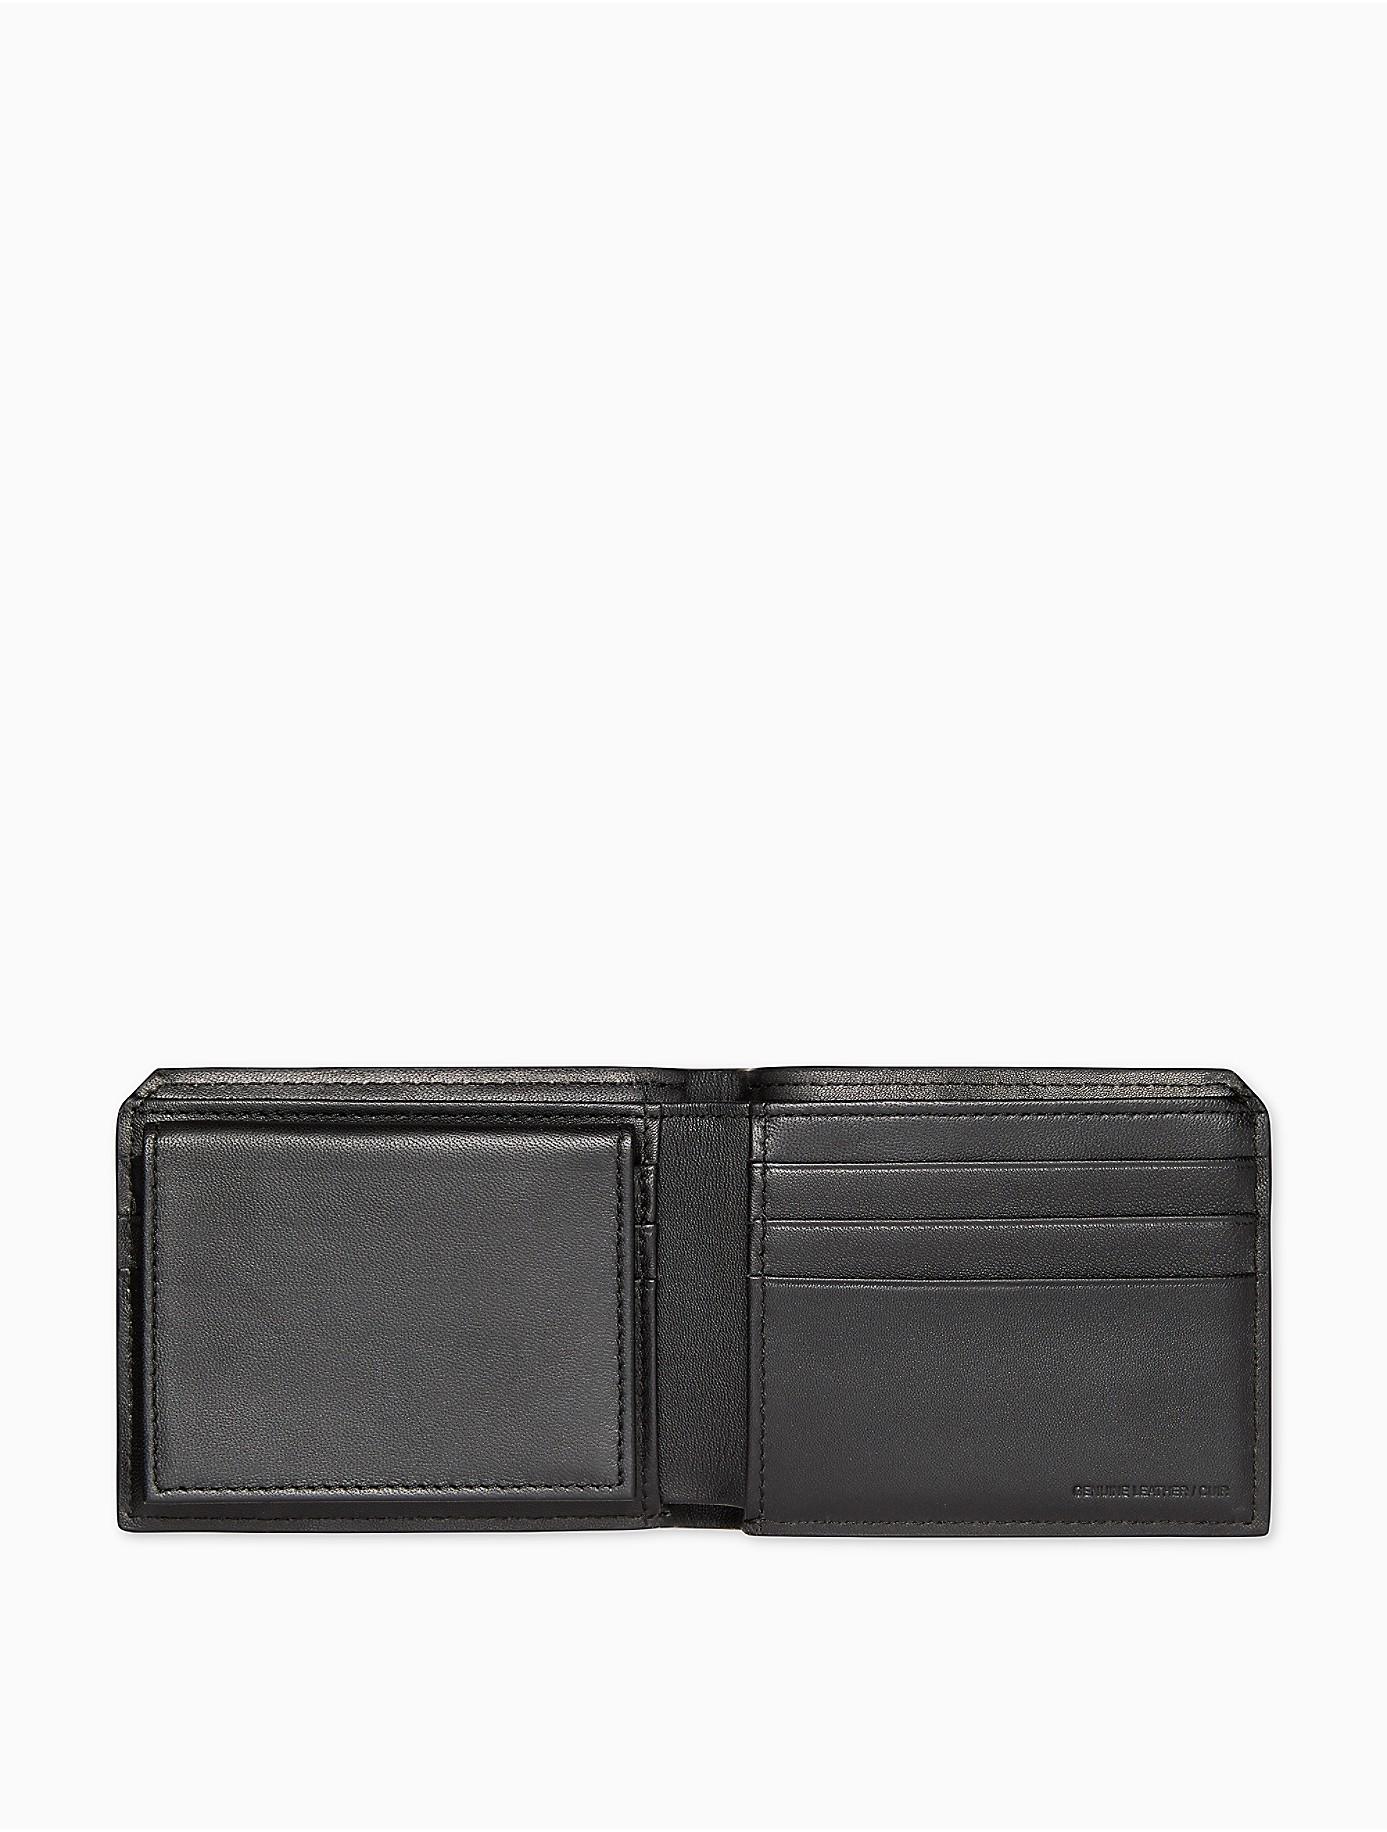 Calvin Klein Matte Saffiano Leather Bifold Wallet in Black for Men